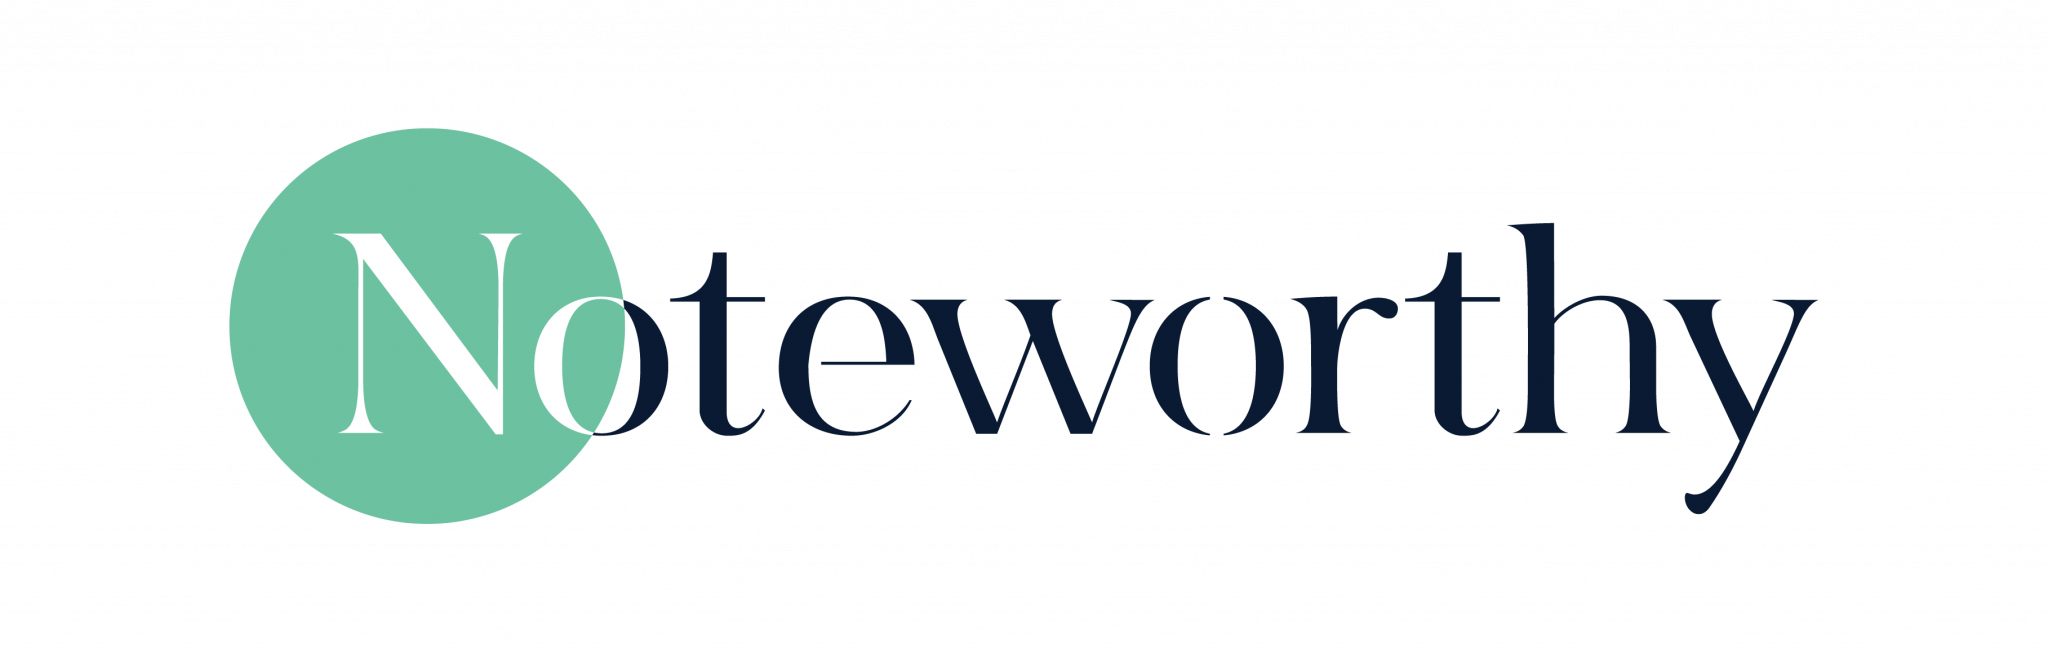 Noteworthy's Logo